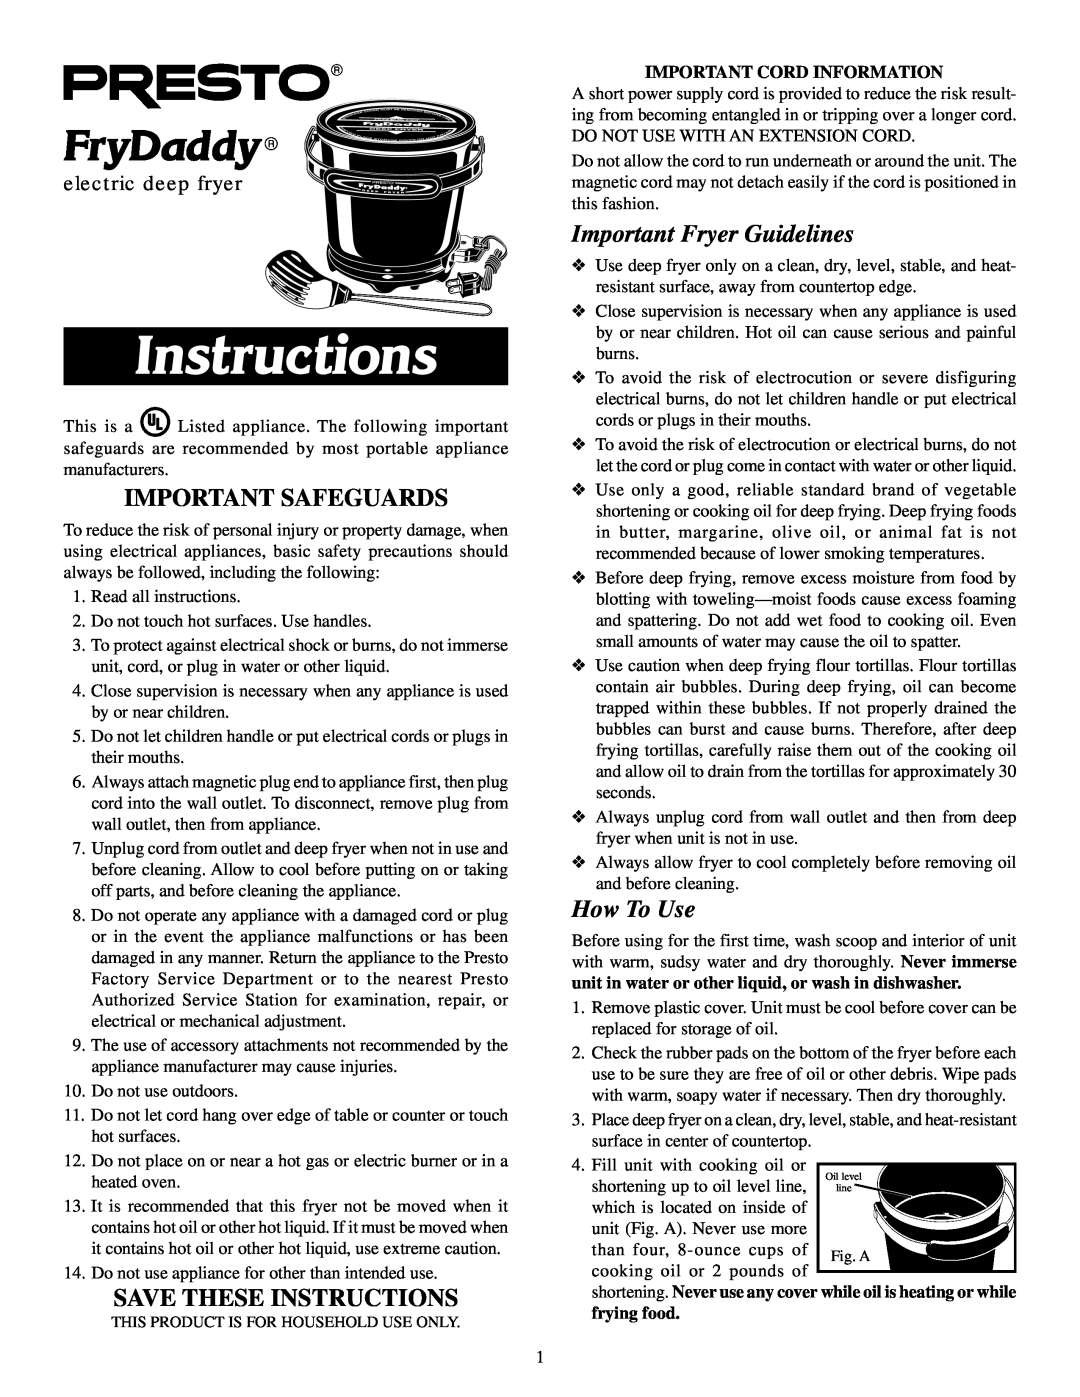 Presto FryDaddy electric deep fryer manual Important Fryer Guidelines, How To Use, Instructions, FryDaddy  